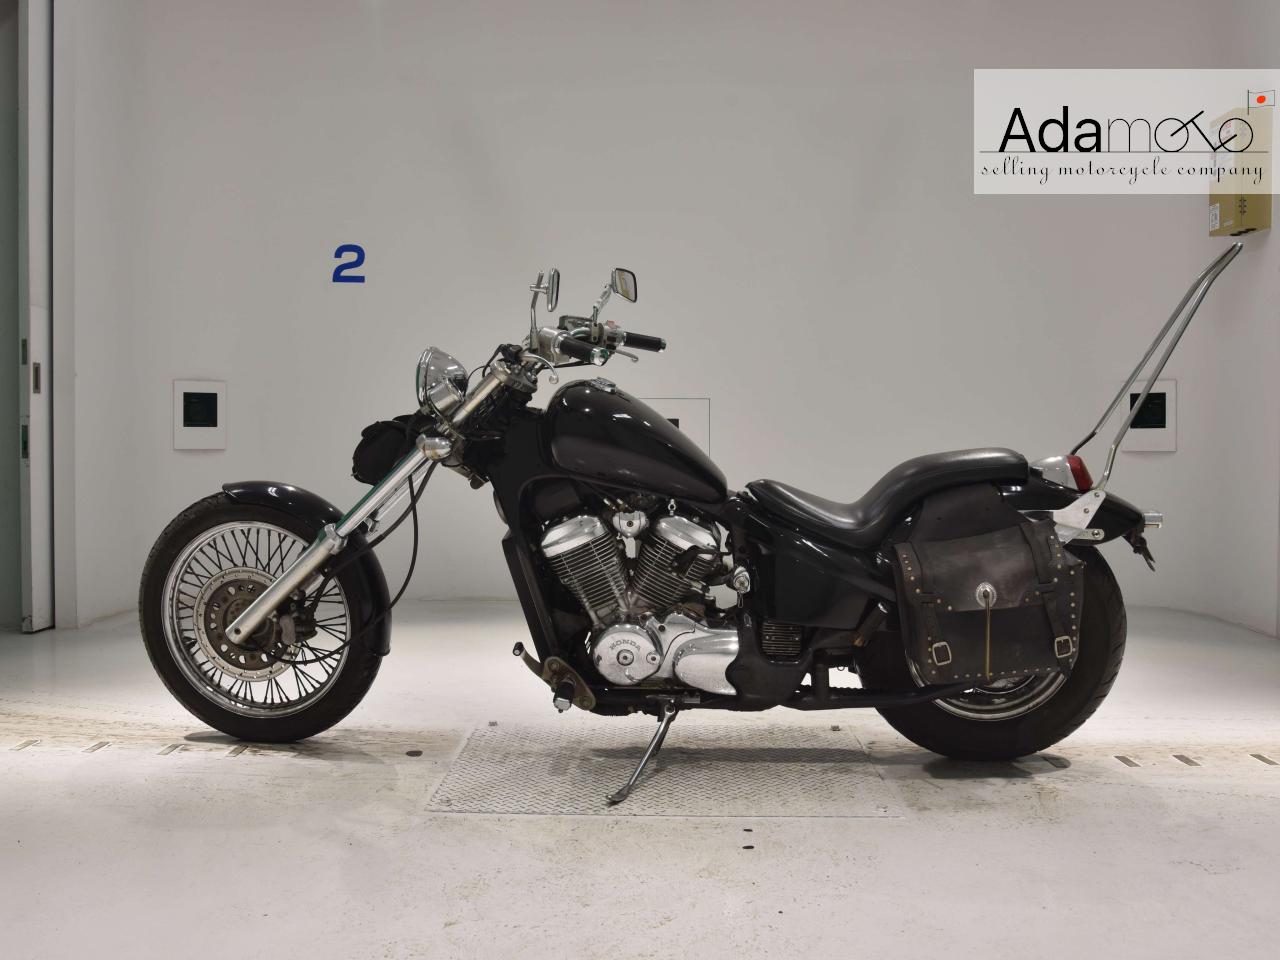 Honda STEED400 - Adamoto - Motorcycles from Japan